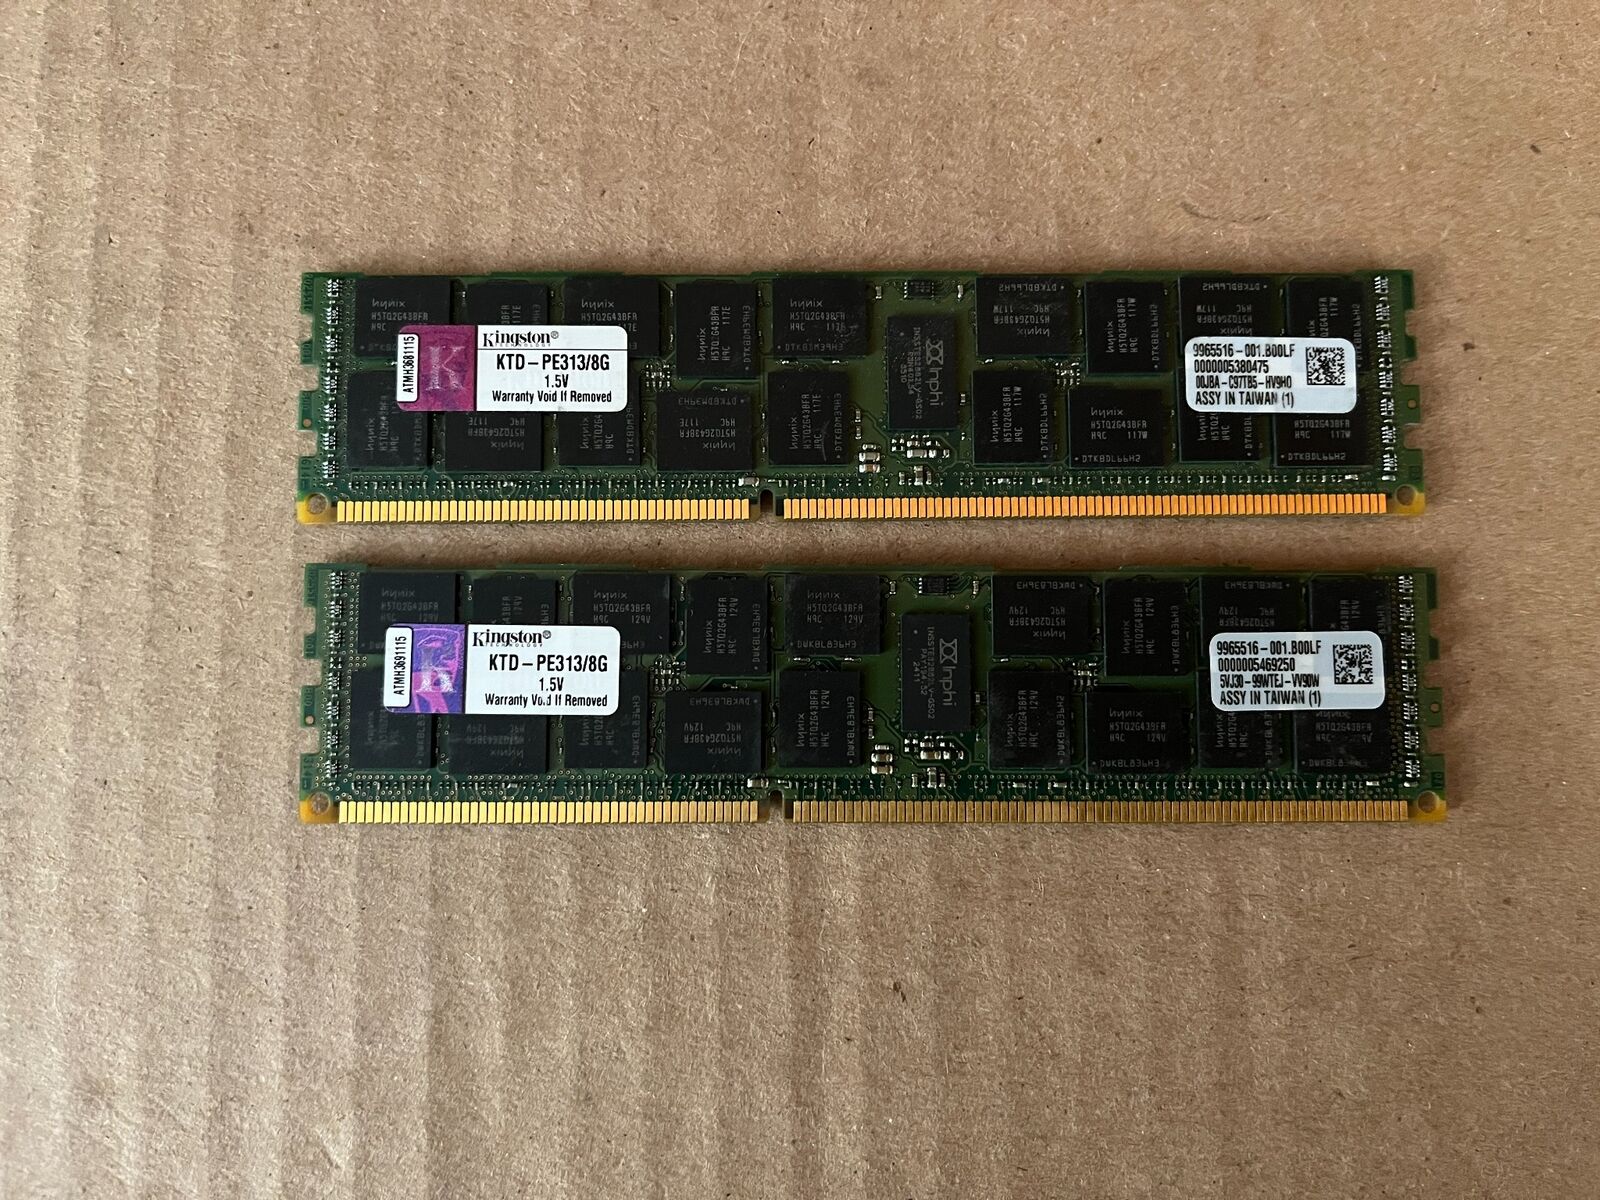 KINGSSTON (8GBX2) KTD-PE313/8G 10600R DDR3 1333 SDRAM DDR3 REGISTERED ECC G5-2(7